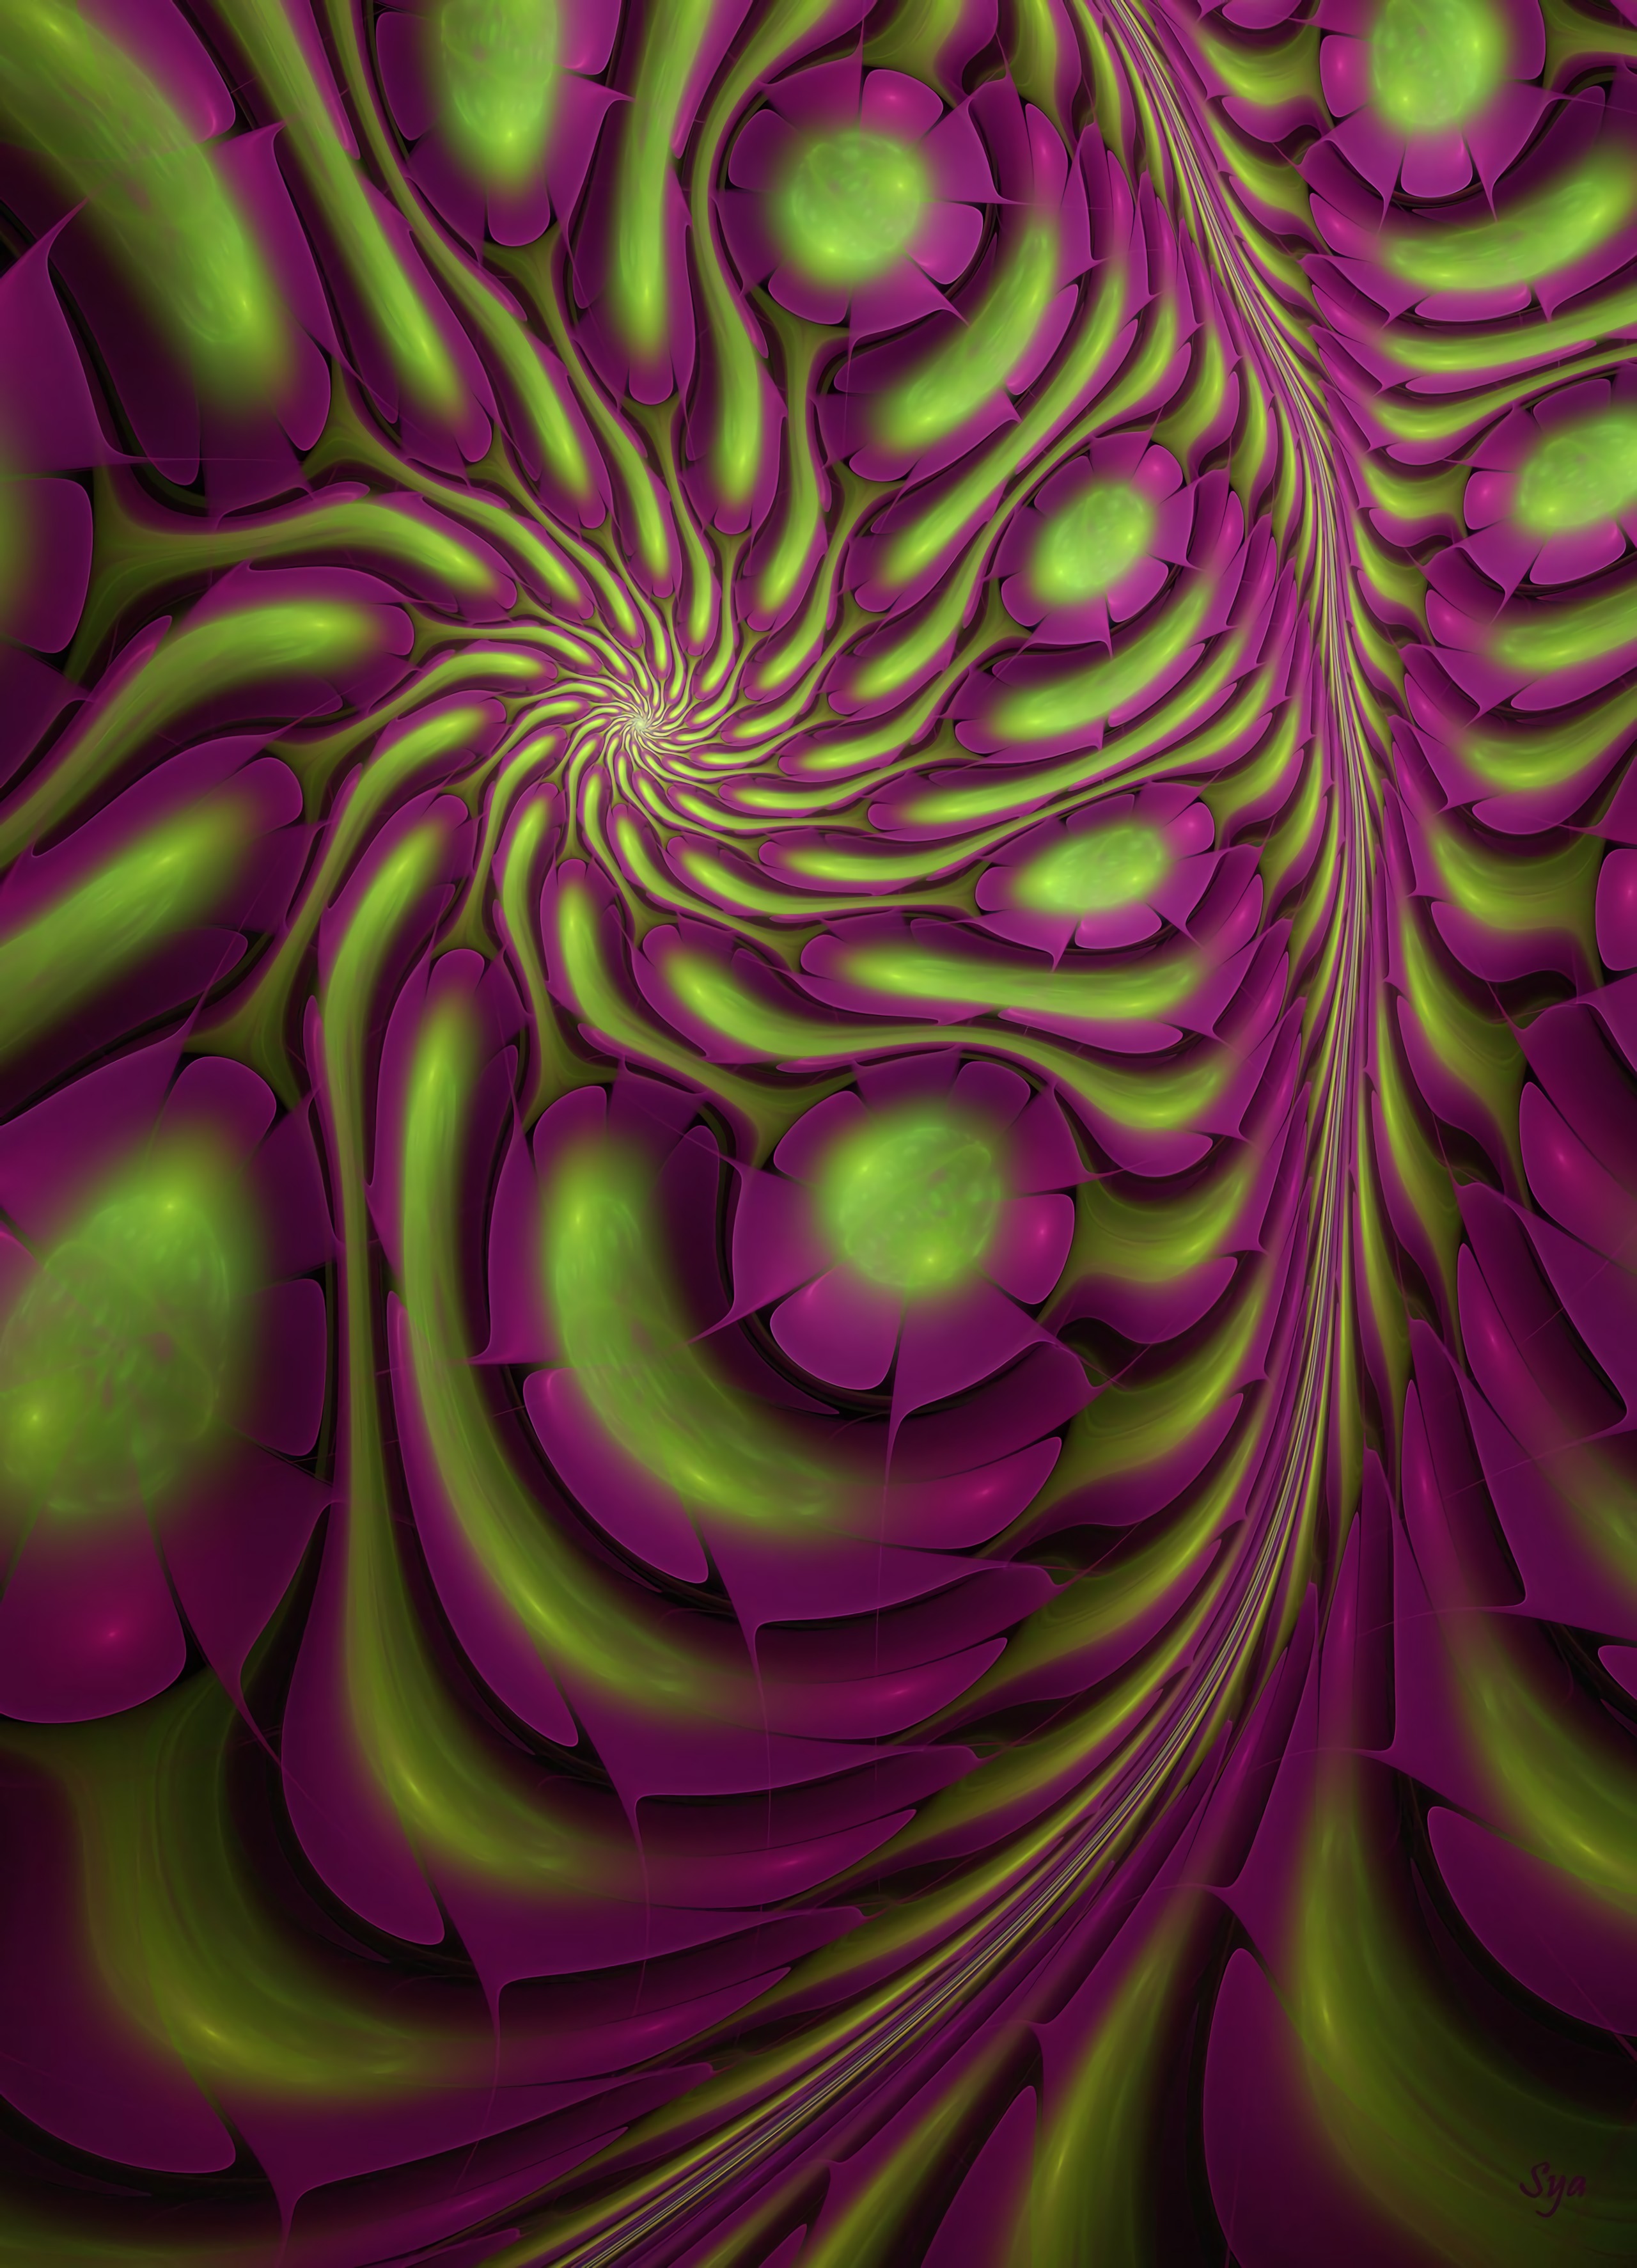 32k Wallpaper Funnel abstract, involute, fractal, swirling